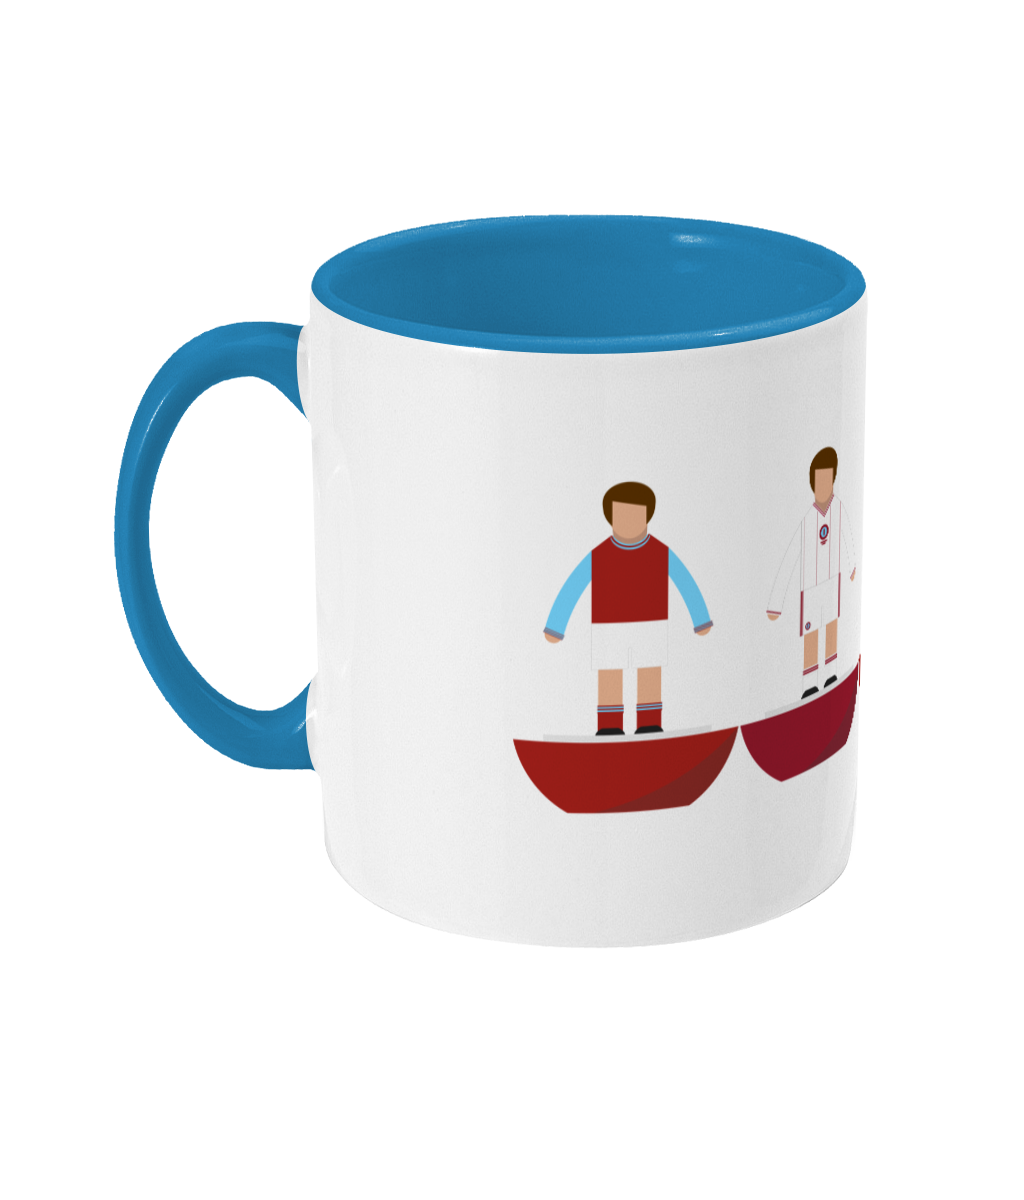 Football Kits 'Aston V combined' Mug